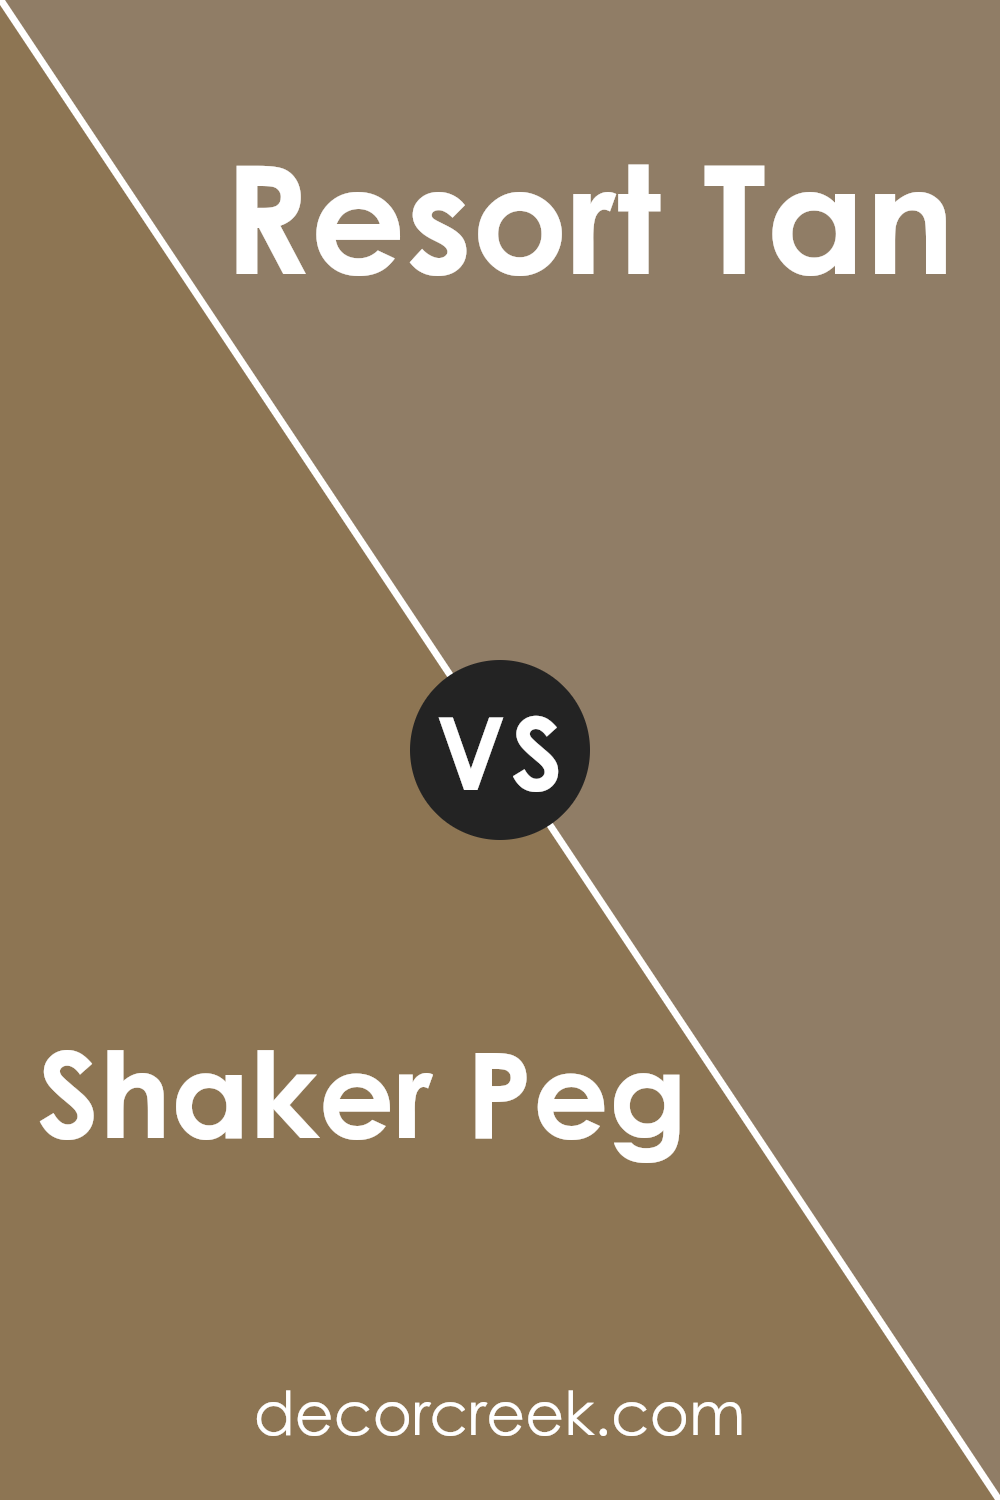 shaker_peg_sw_9539_vs_resort_tan_sw_7550